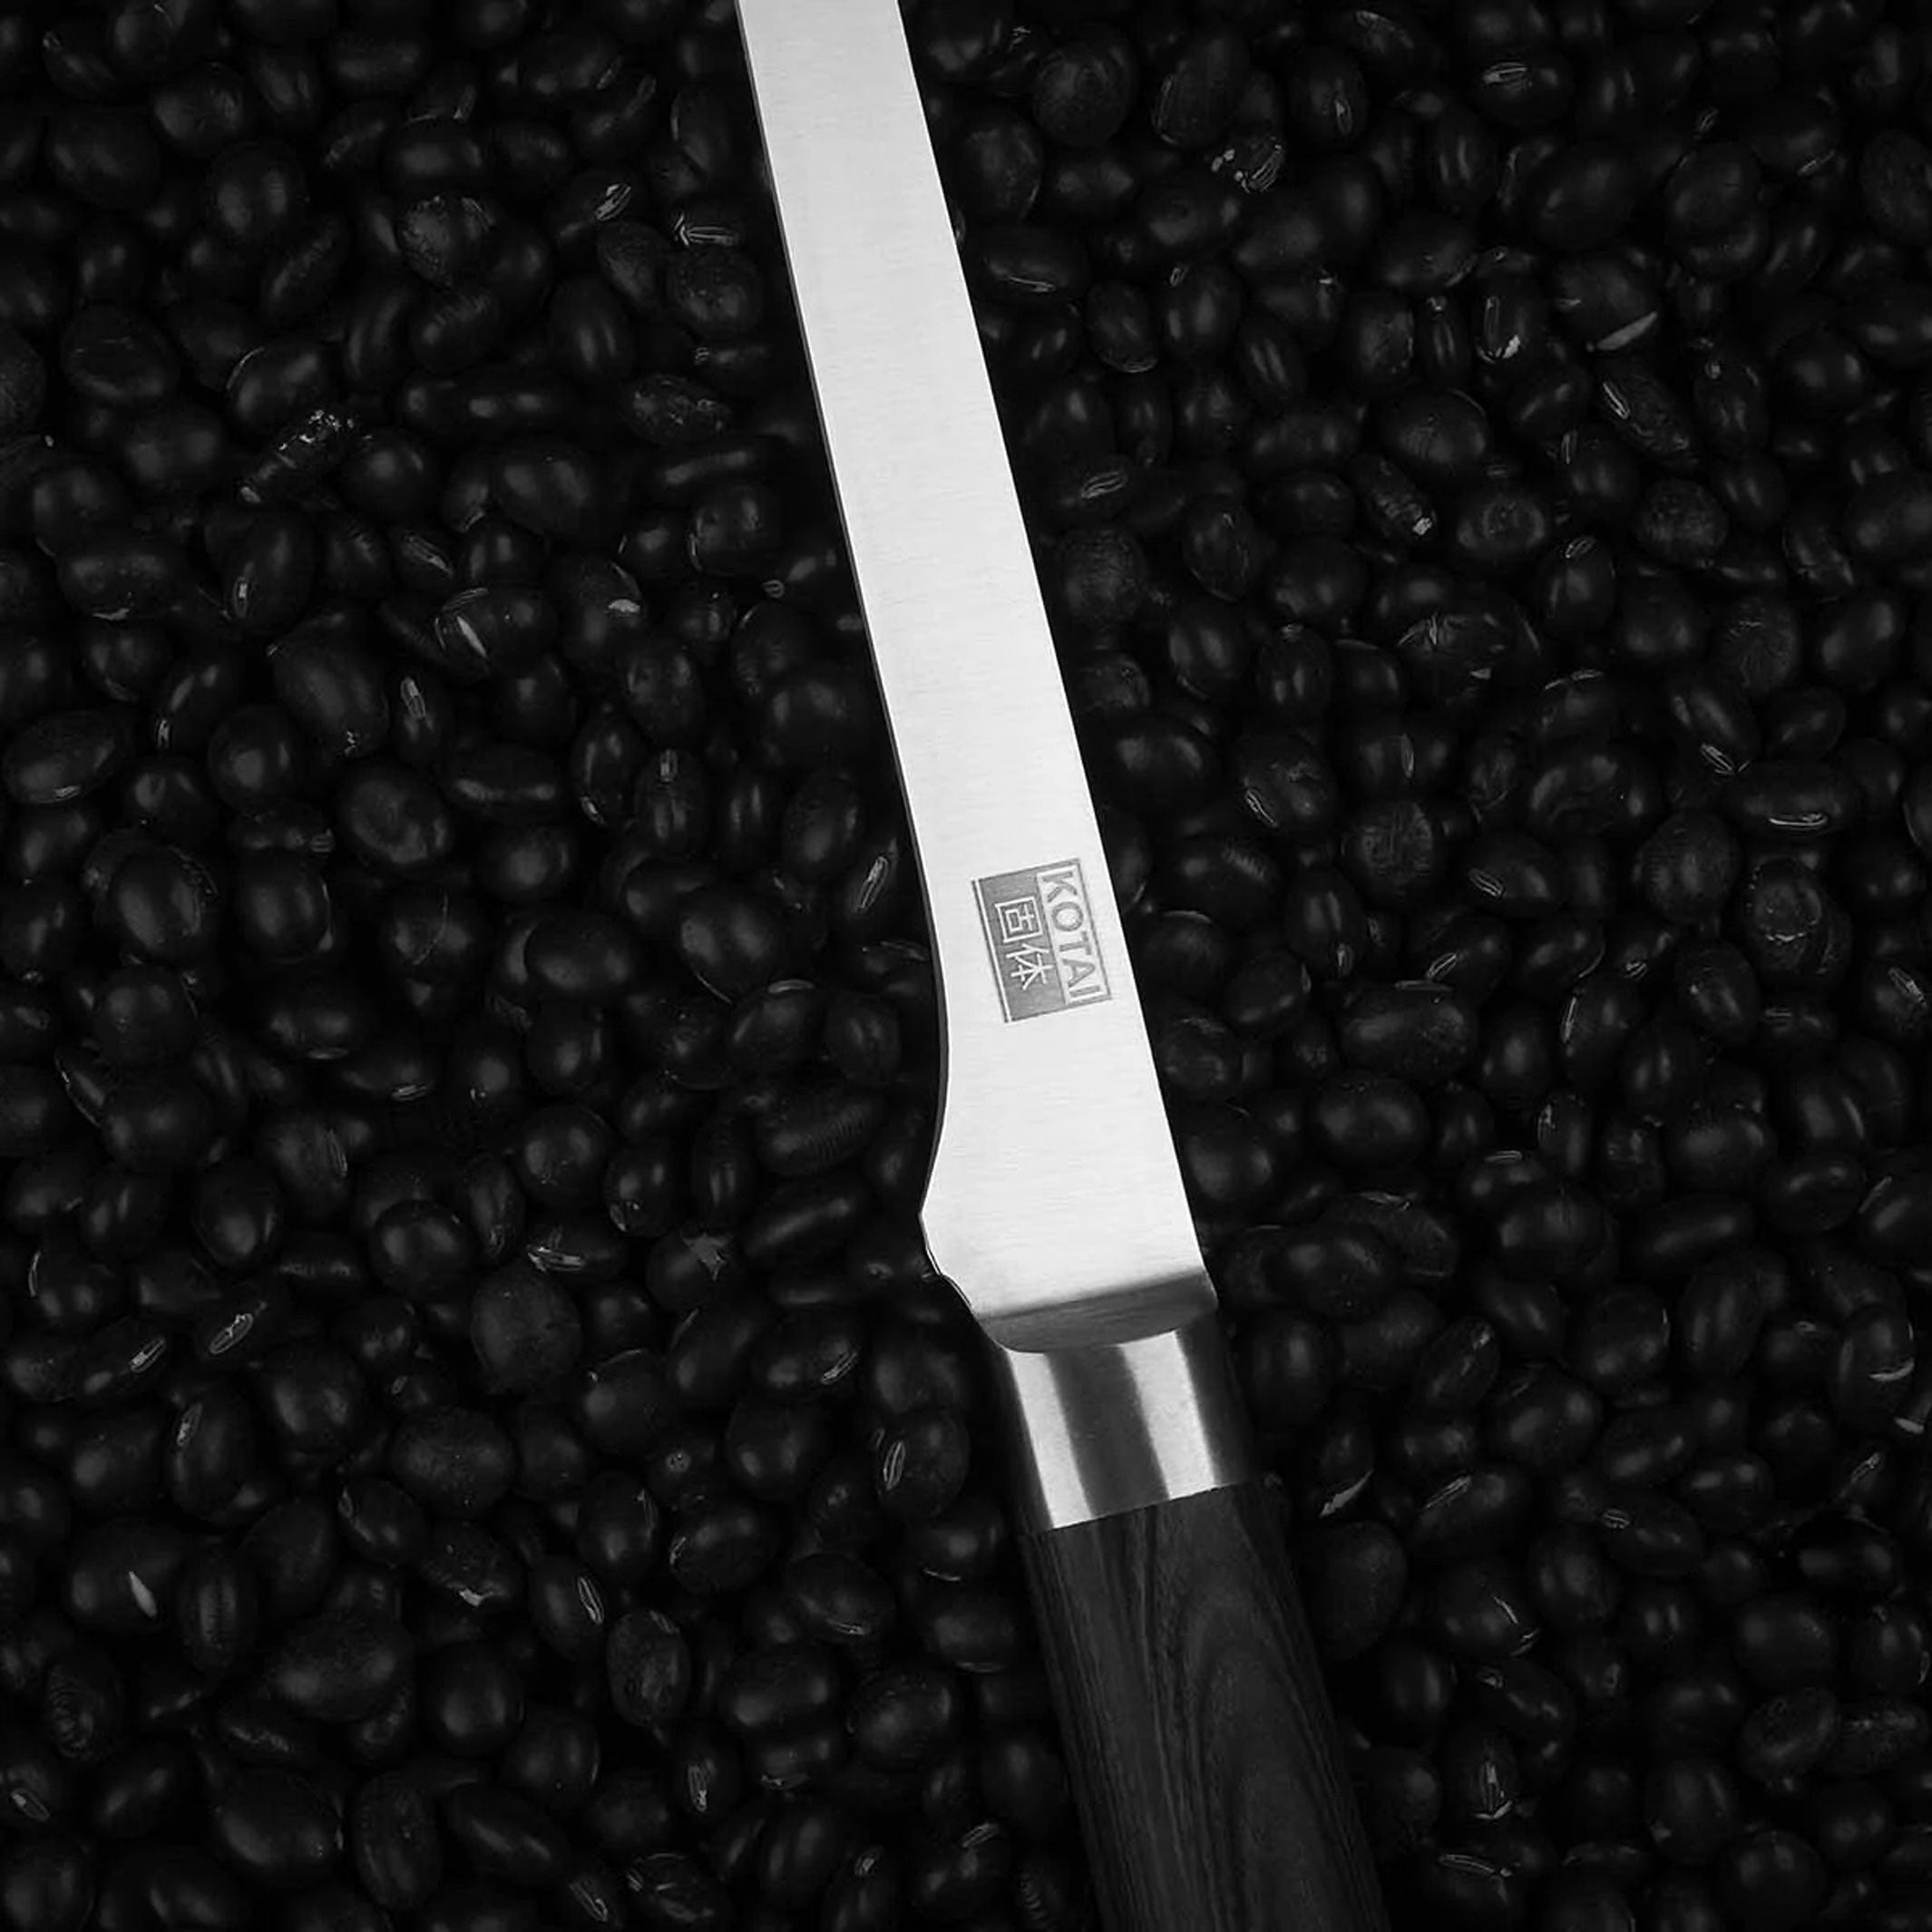 FILLET KNIFE for fish | wooden saya & bamboo gift box | 20cm blade | Kotai